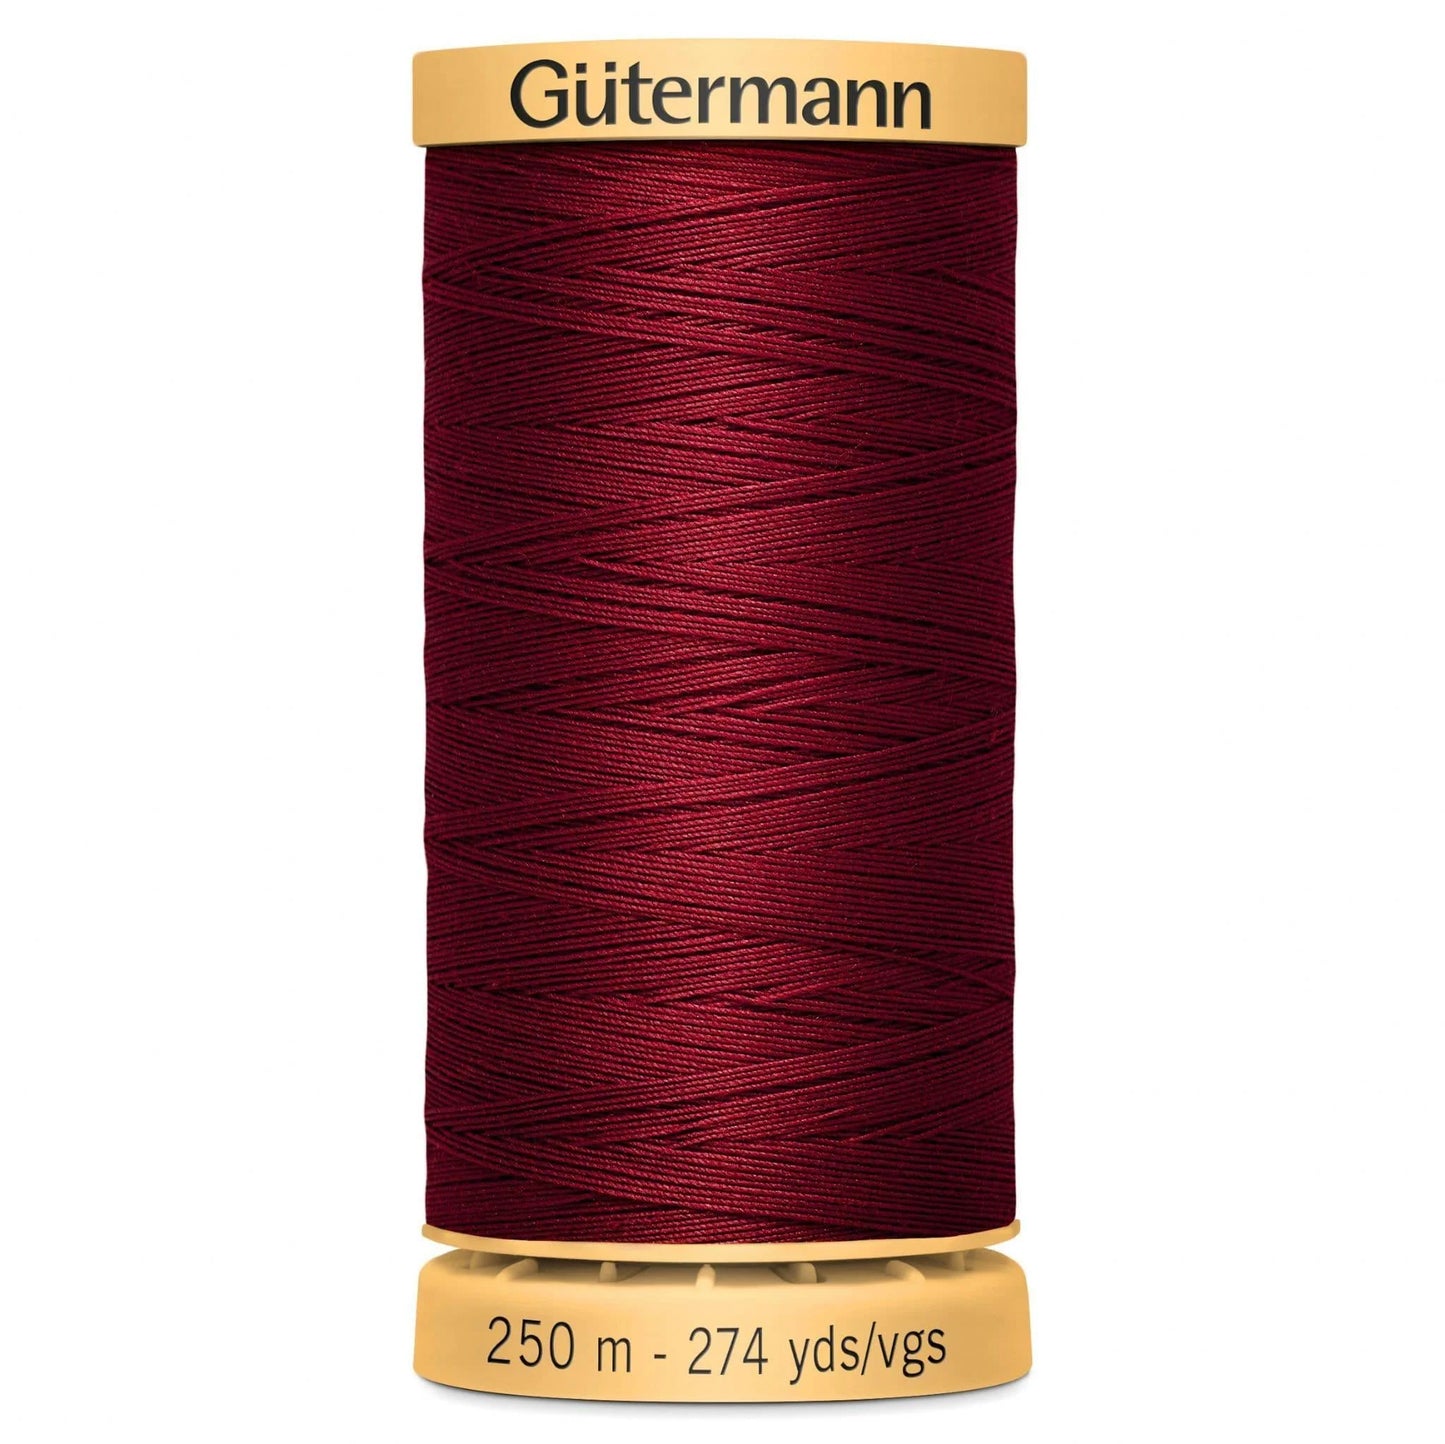 2433 Gutermann Natural Cotton Thread 250m - Maroon